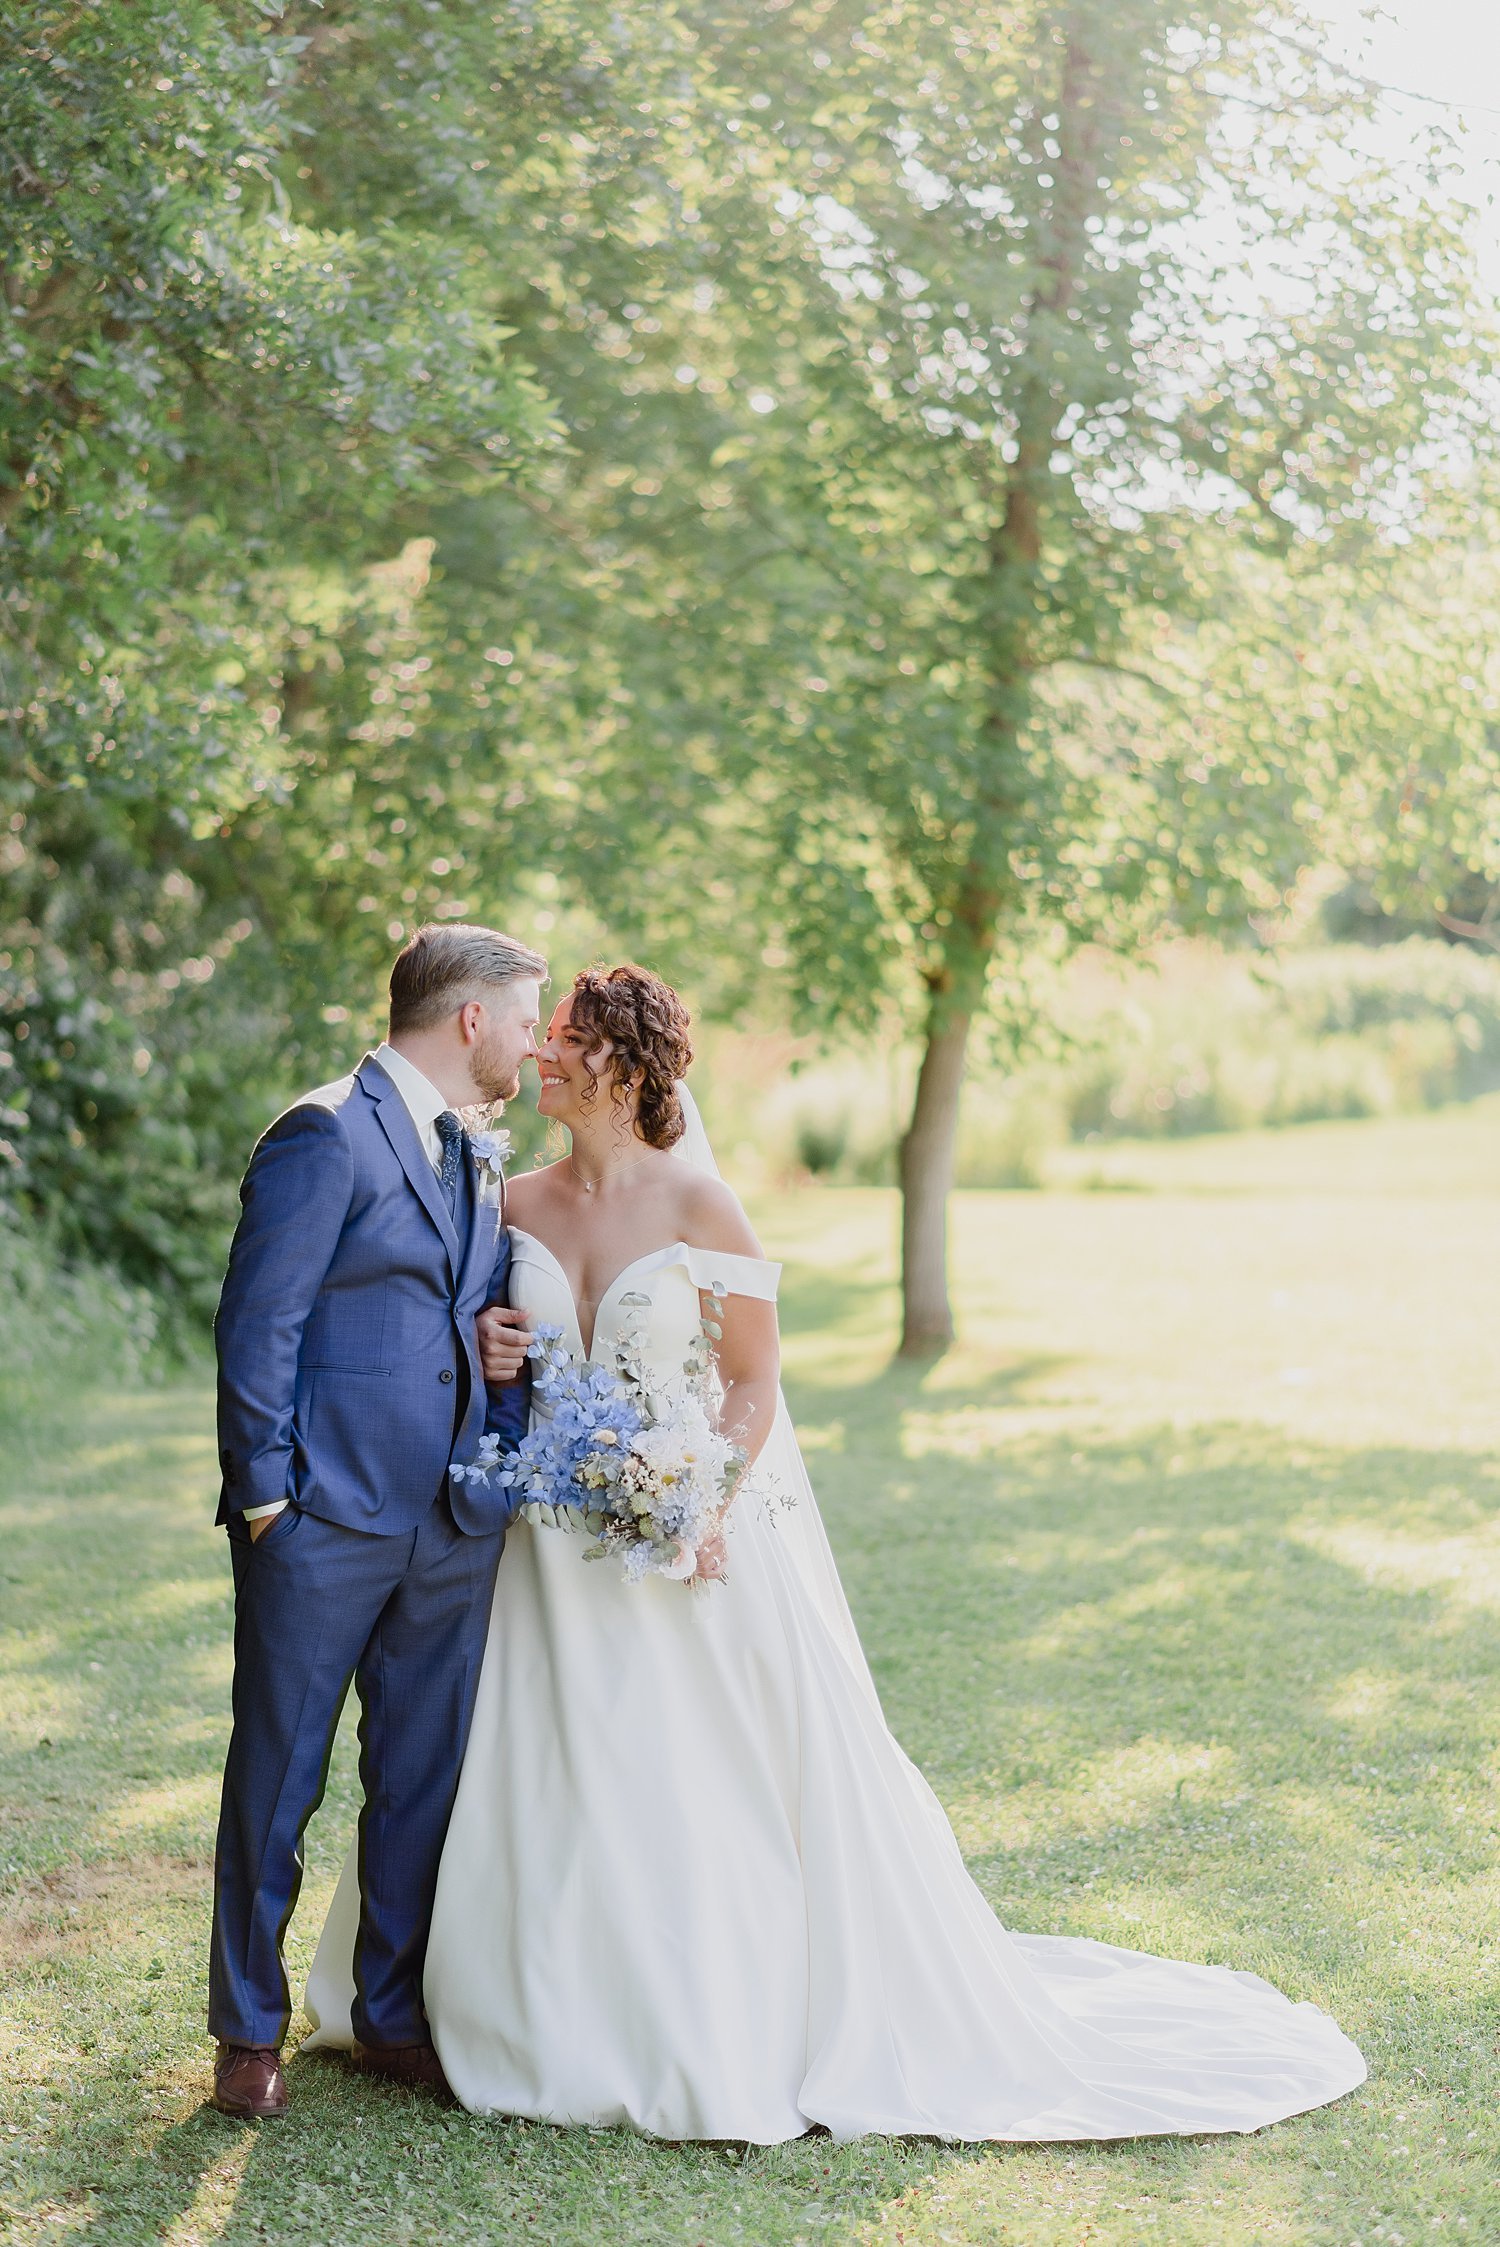 Elegant Summer Backyard Tented Wedding in Sydenham, Ontario | Prince Edward County Wedding Photographer | Holly McMurter Photographs_0064.jpg